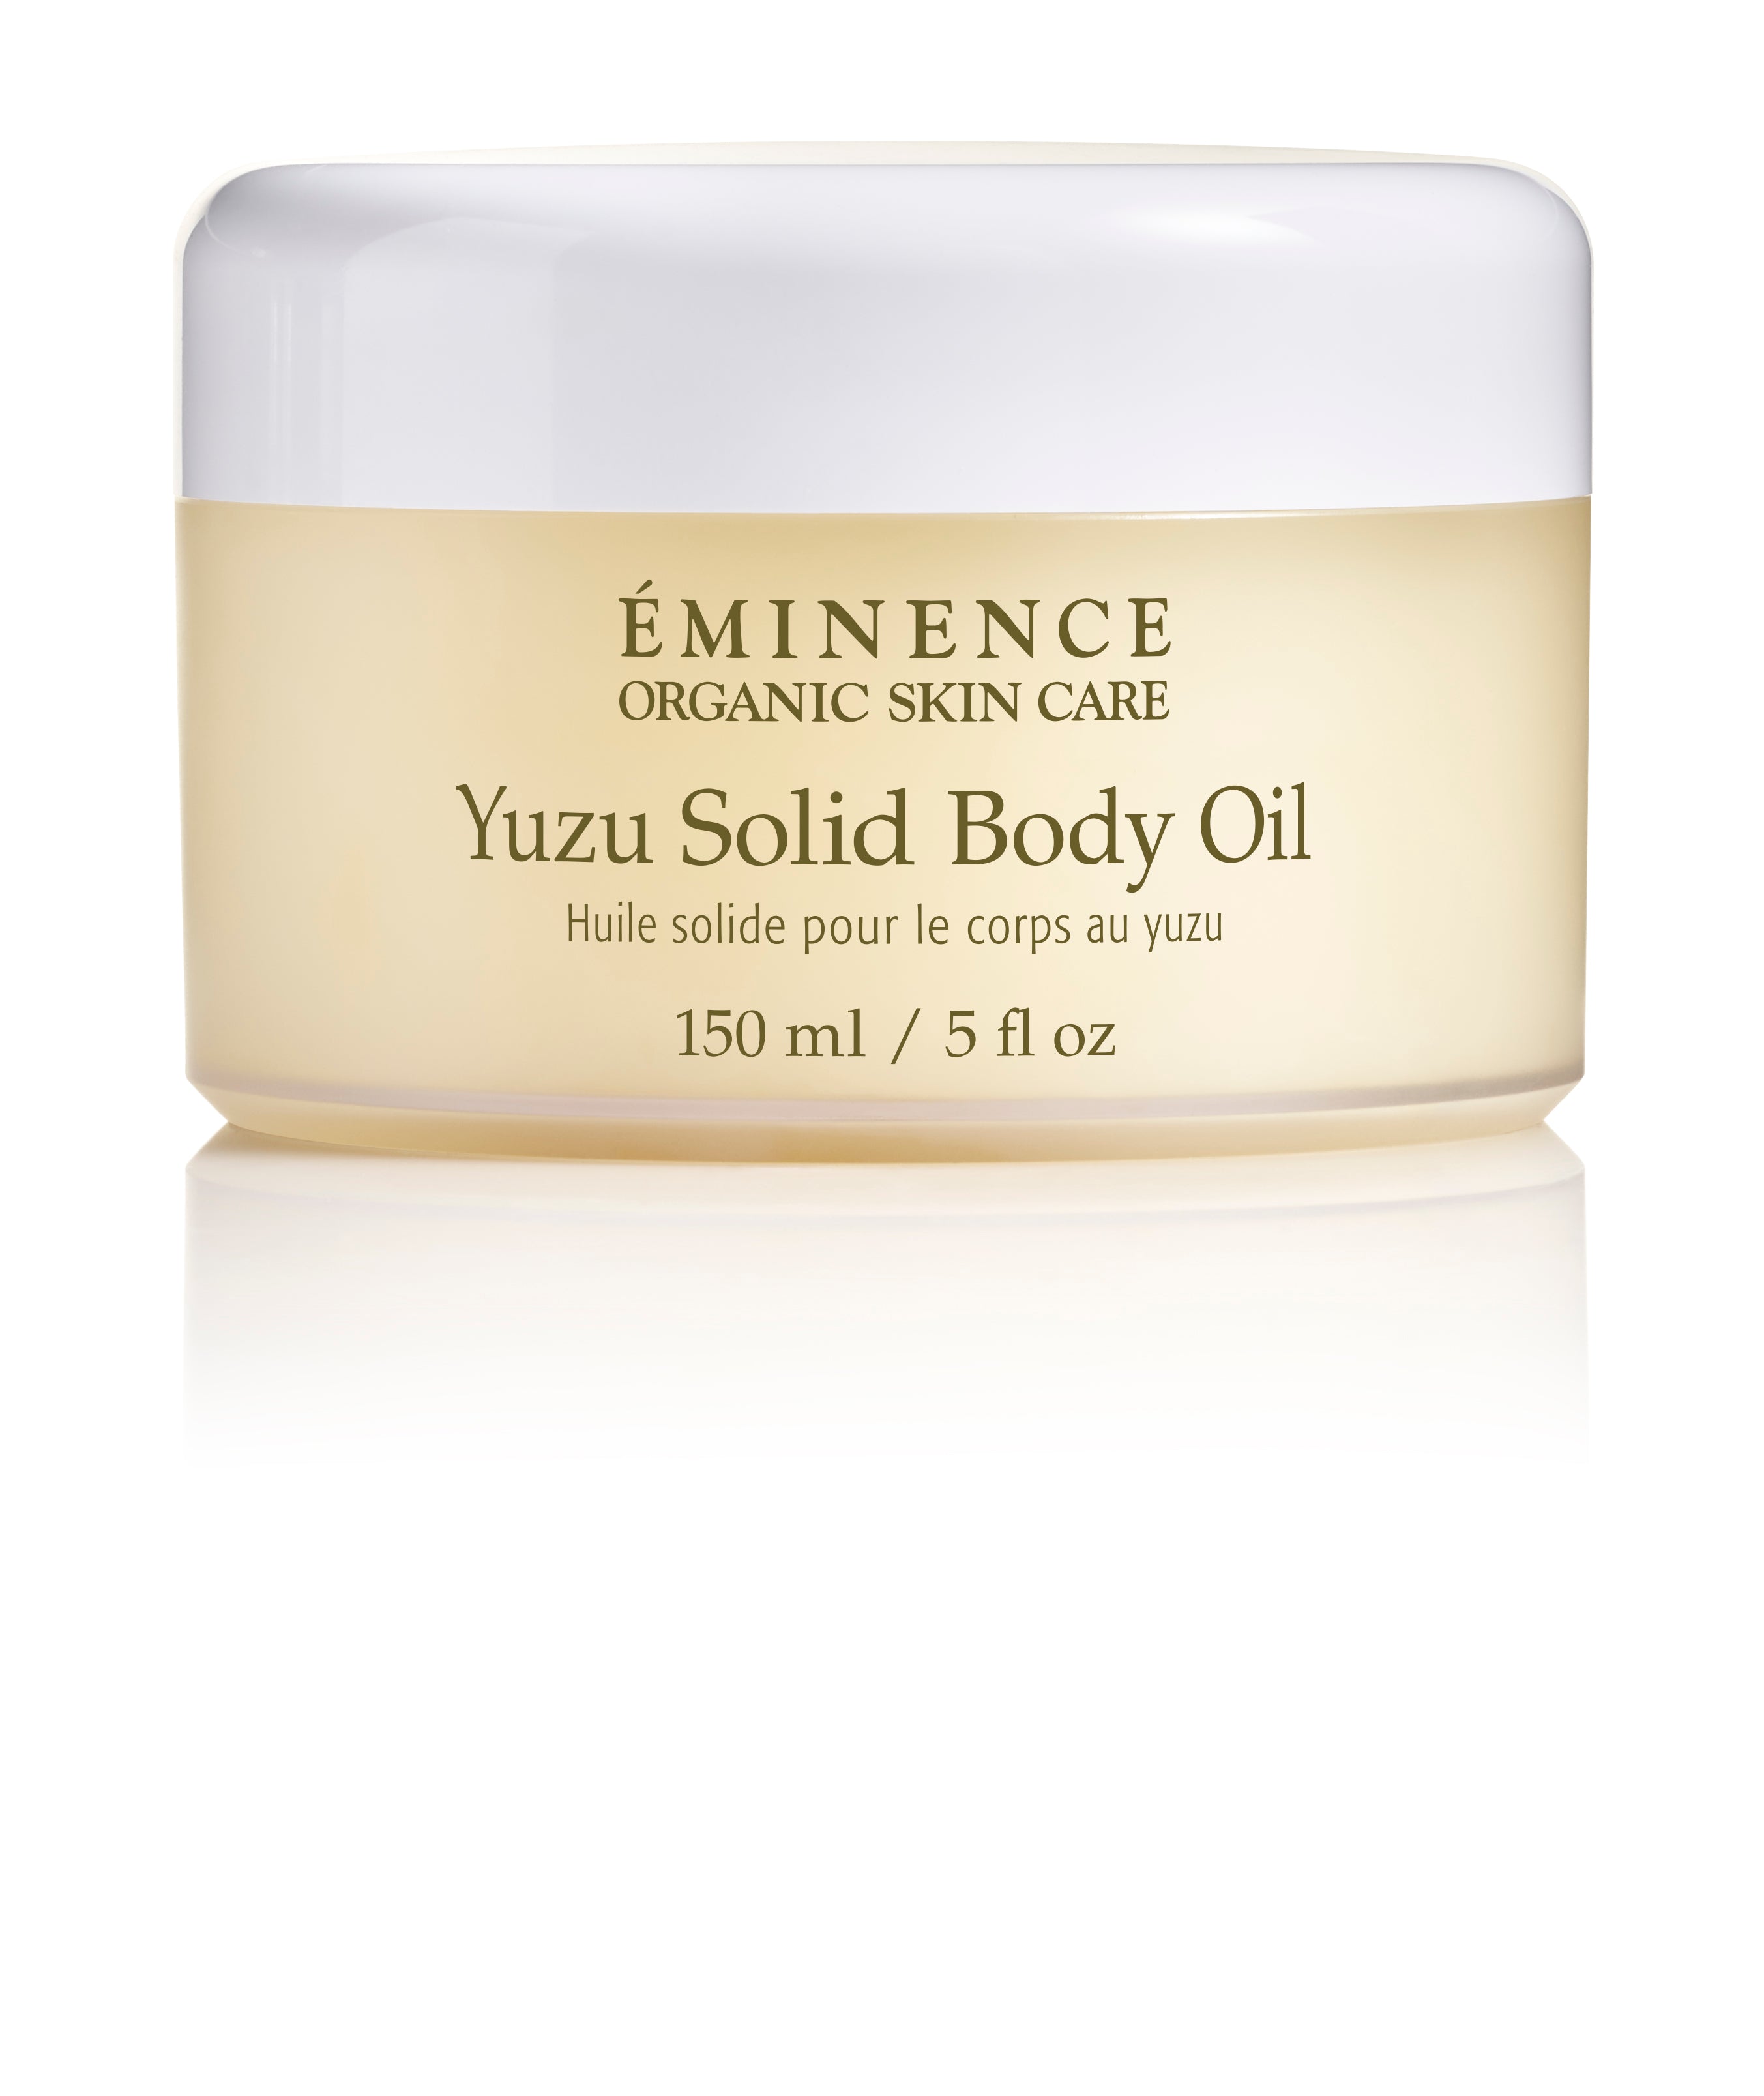 Apricot Body Oil  Eminence Organic Skin Care